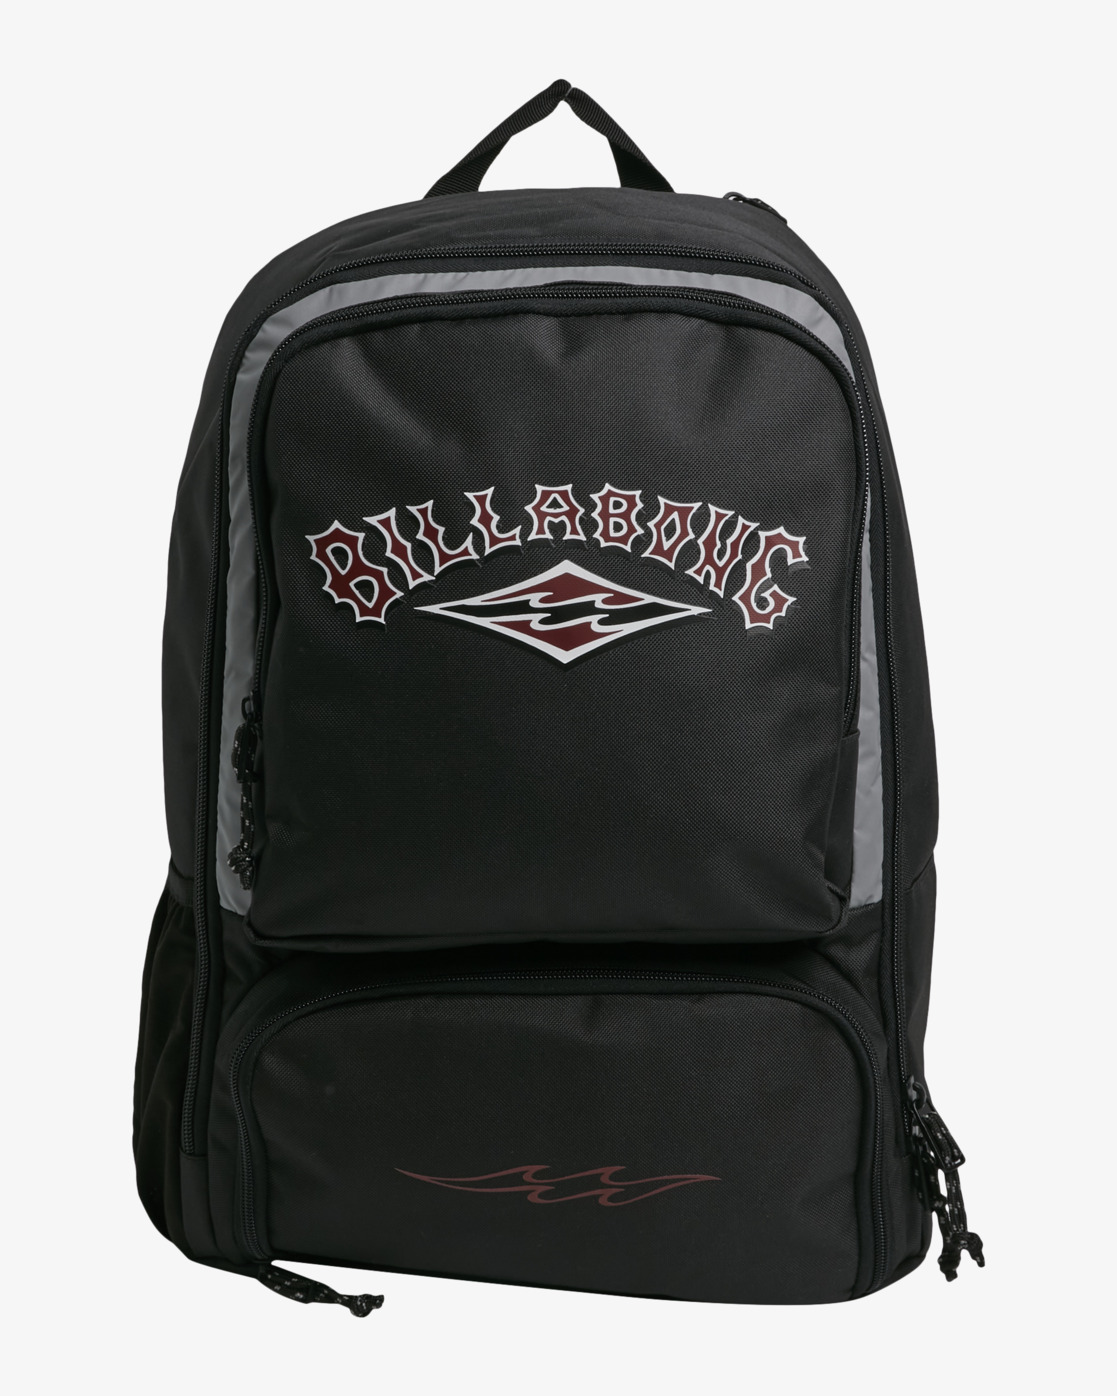 billabong juggernaught backpack